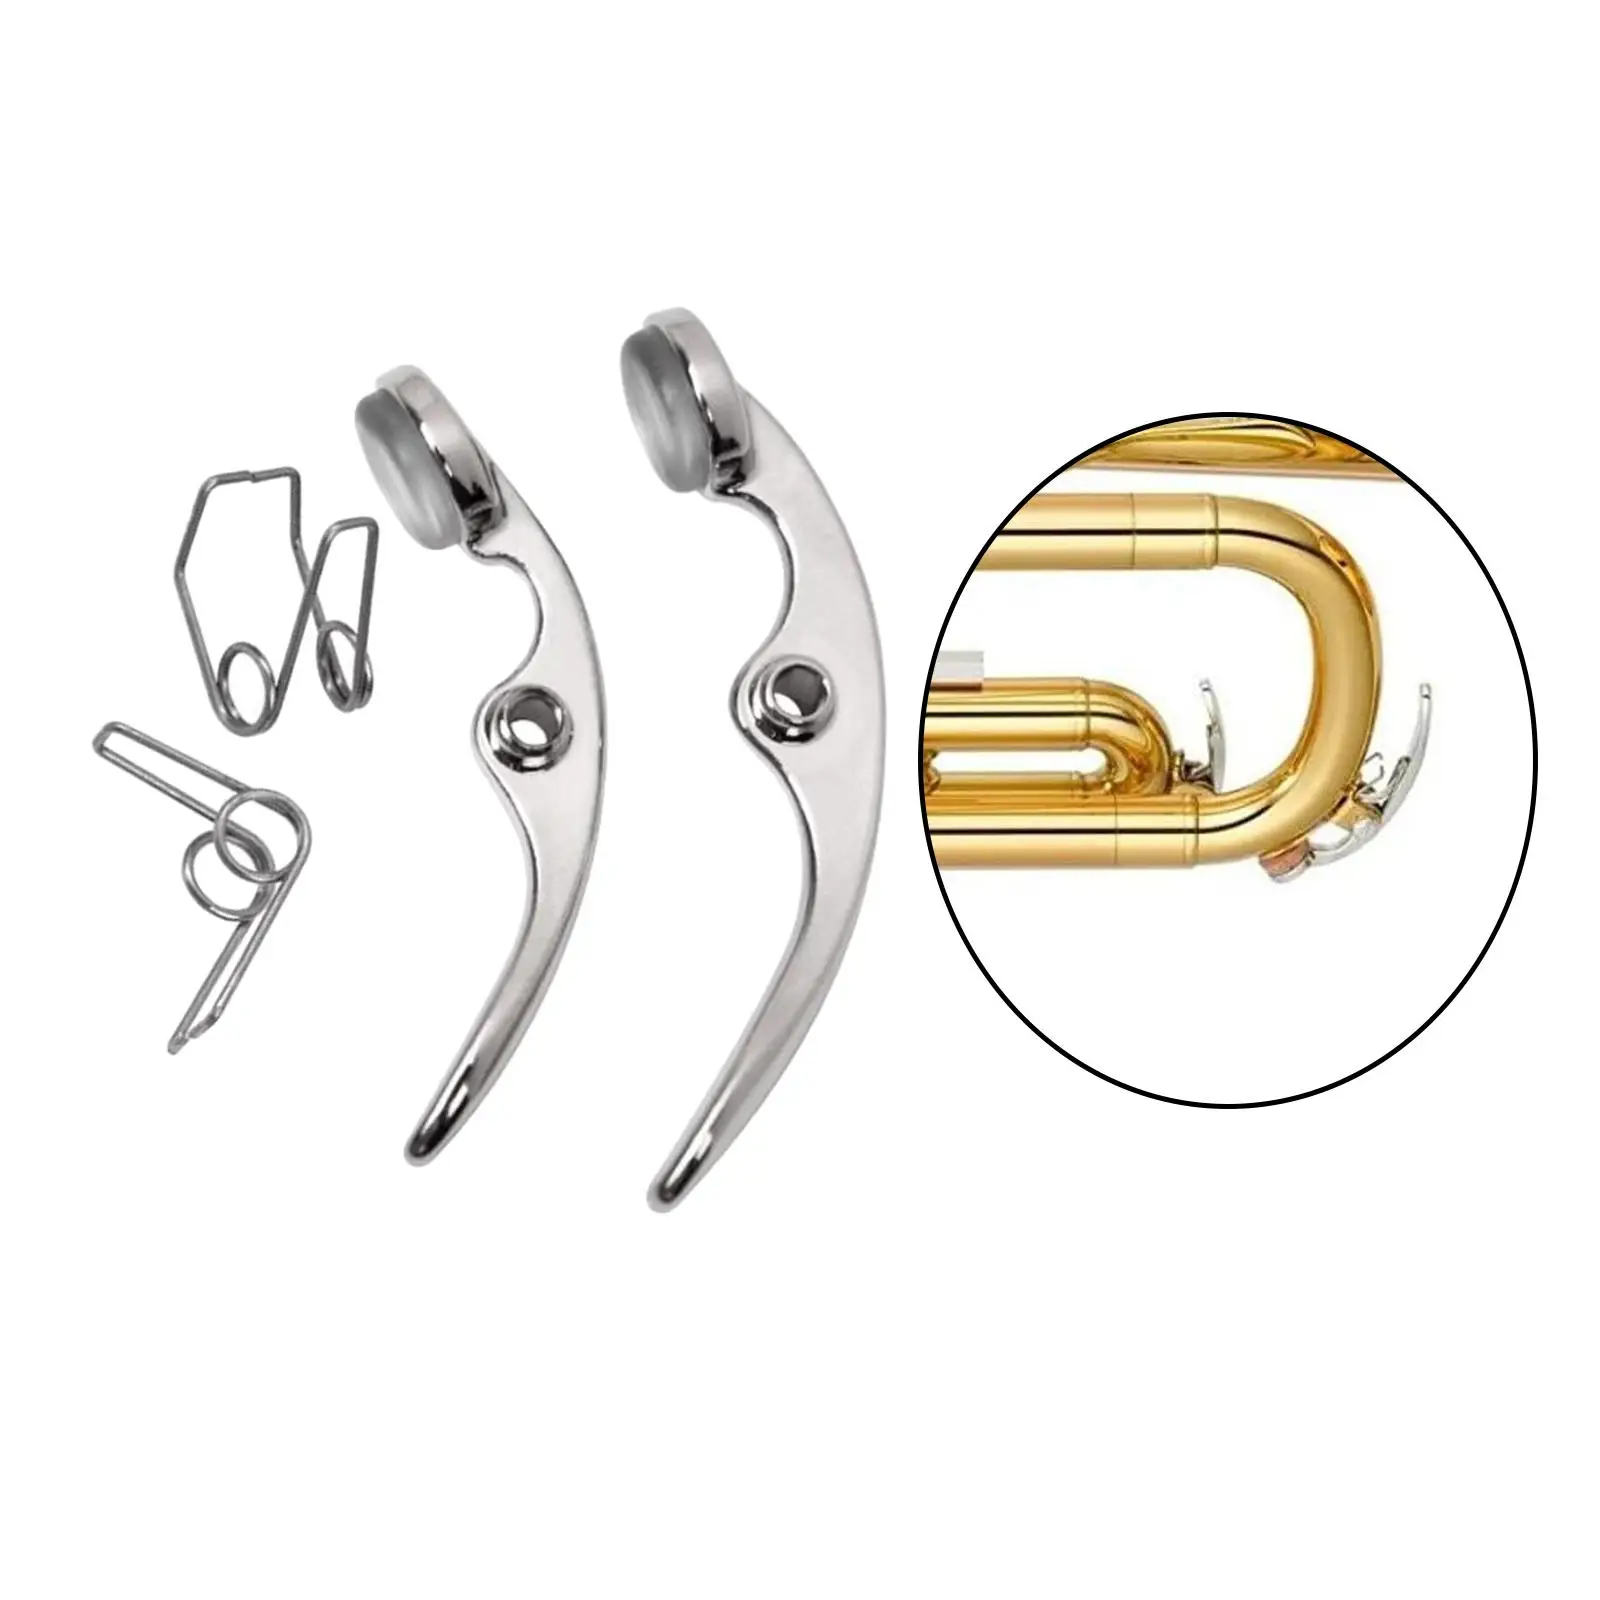 Trumpet Spit Valve Trumpet Maintenance Repairing Wind Instruments Accessory Repair Kits for Trombone Wind Instrument Trumpet